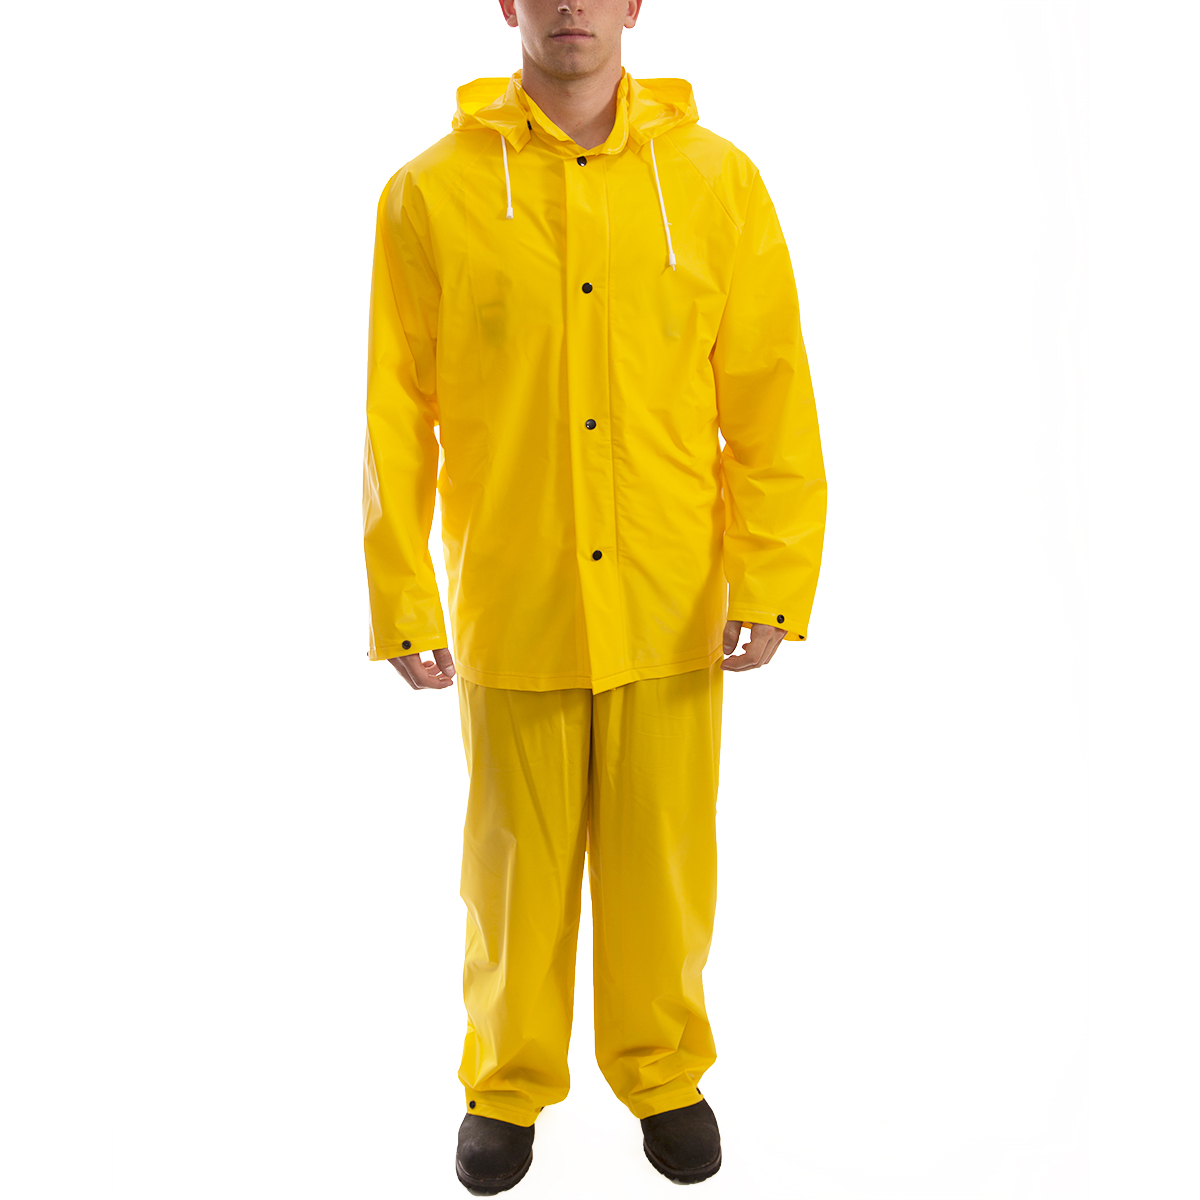 Lime XX-Large Galeton 8000975-XXL 8000975 Repel Rainwear Reflective 0.35 mm PVC Rain Suit 